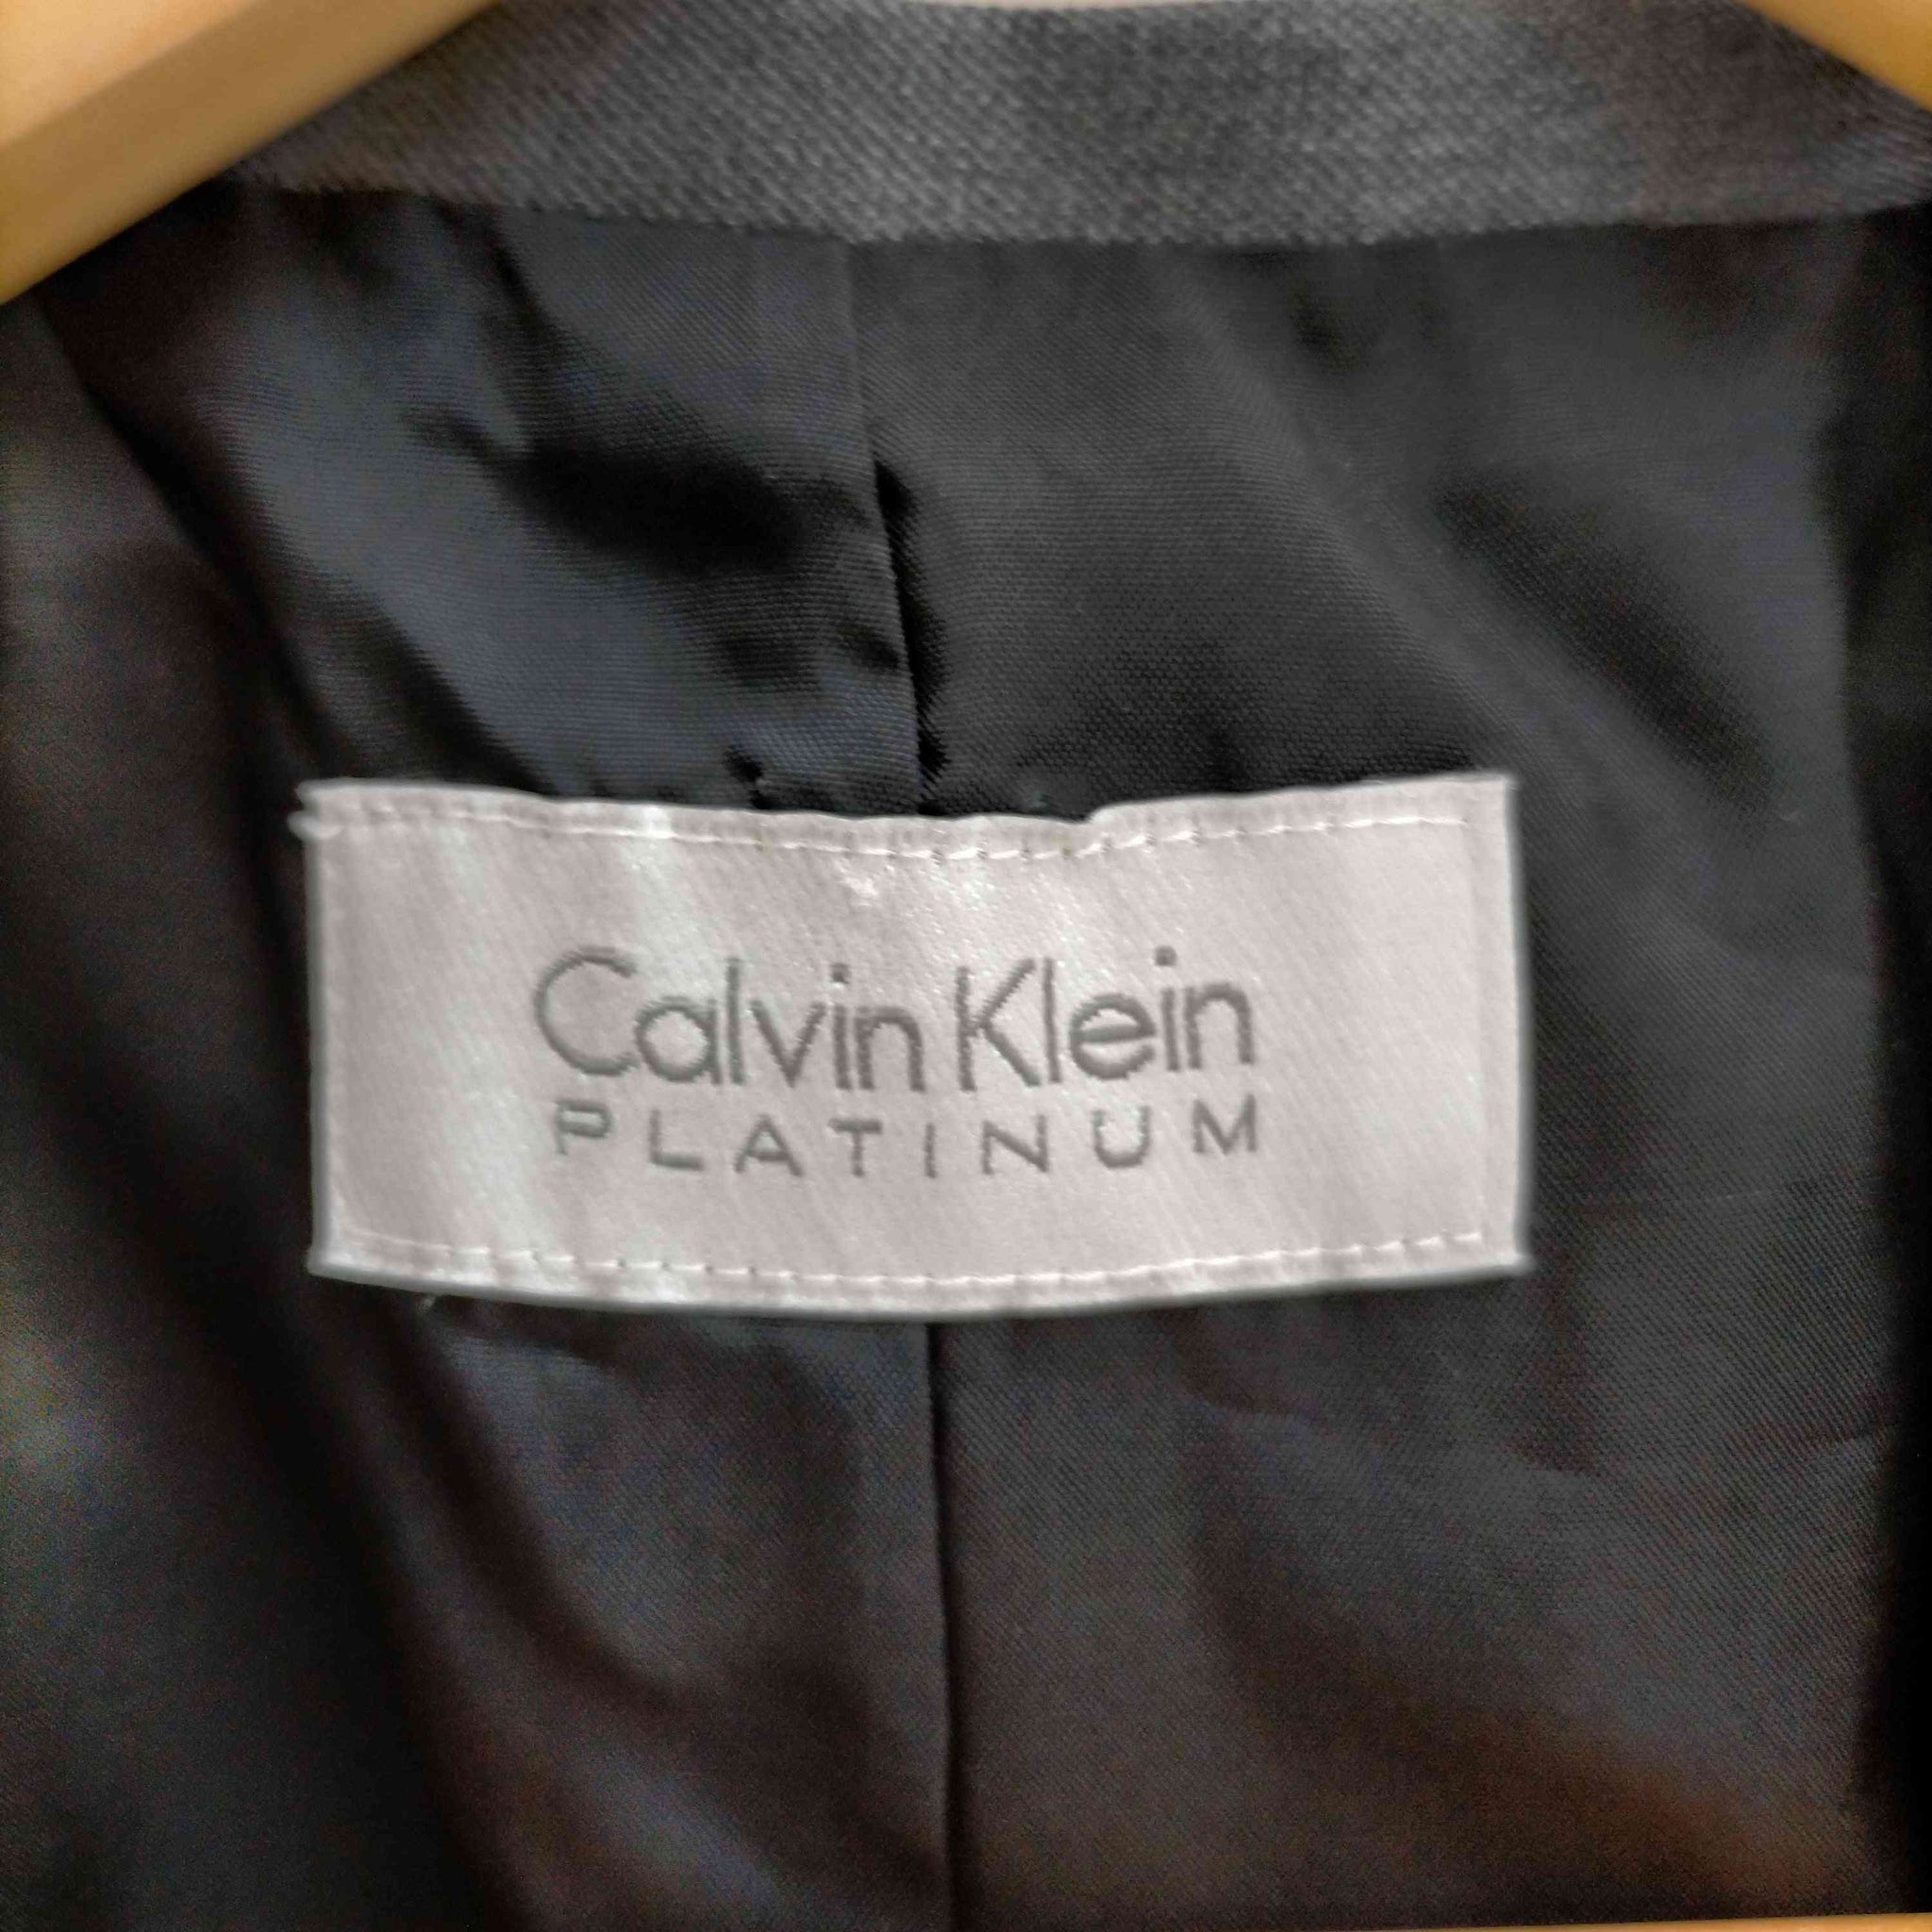 CALVIN KLEIN PLATINUM(カルバンクライン プラチナ)2B スーツセット